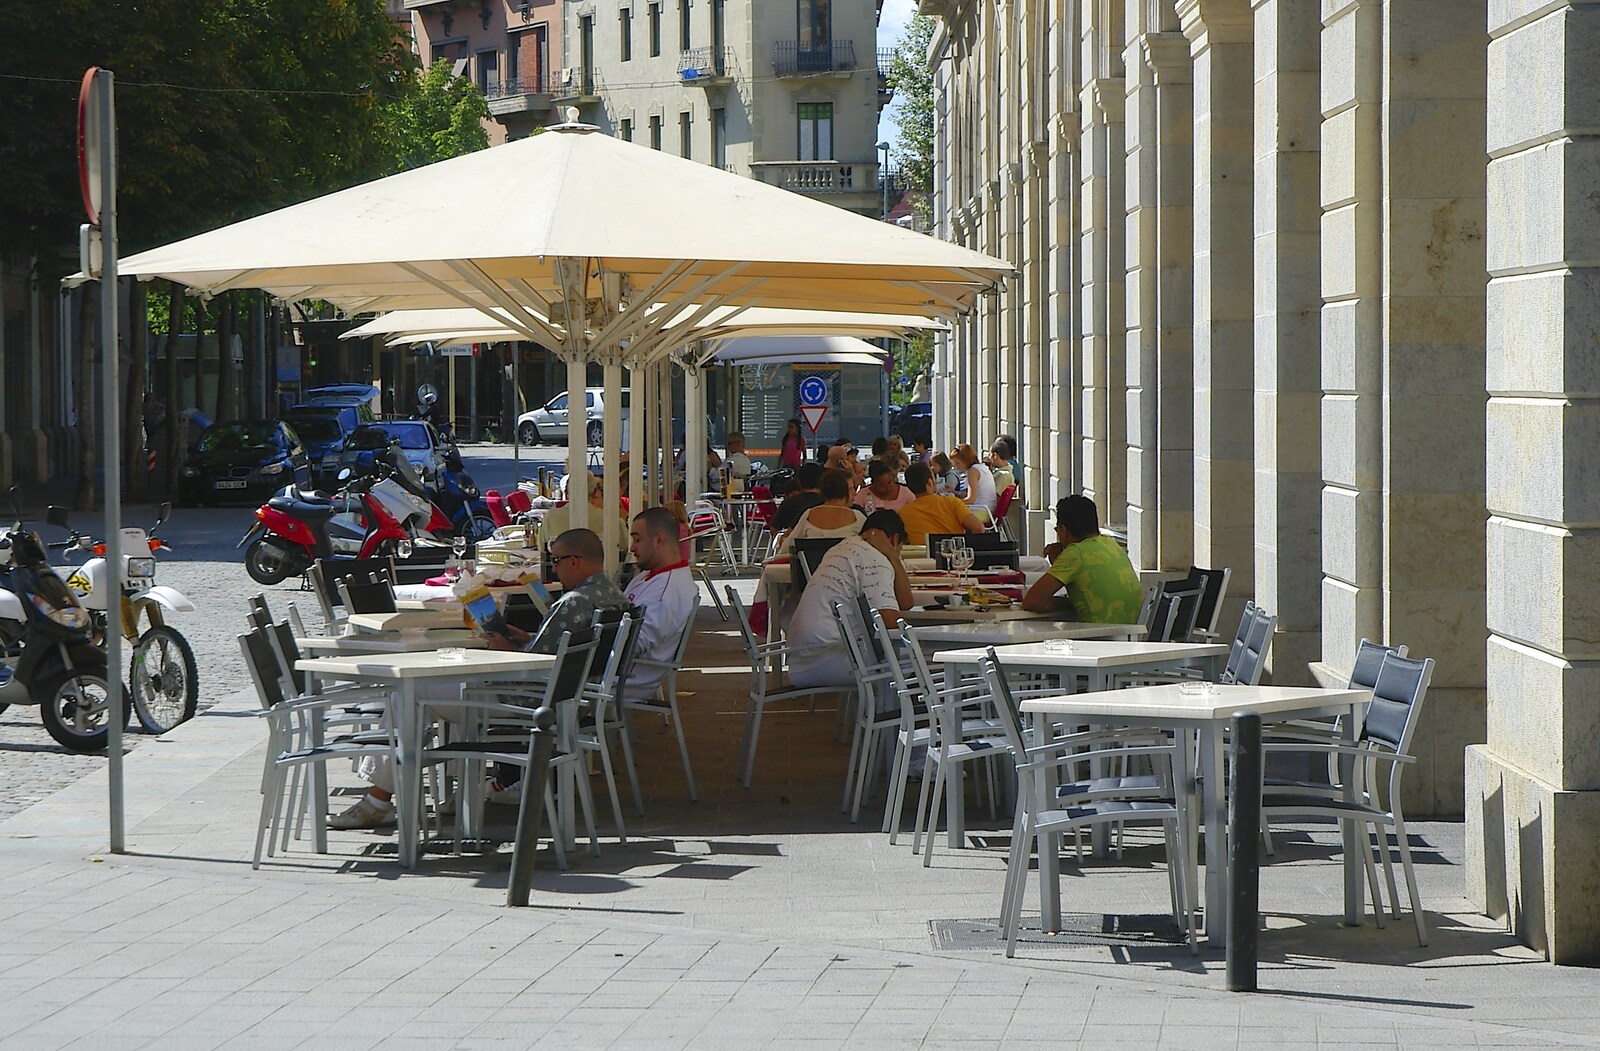 Café street life from Girona, Catalunya, Spain - 17th September 2006